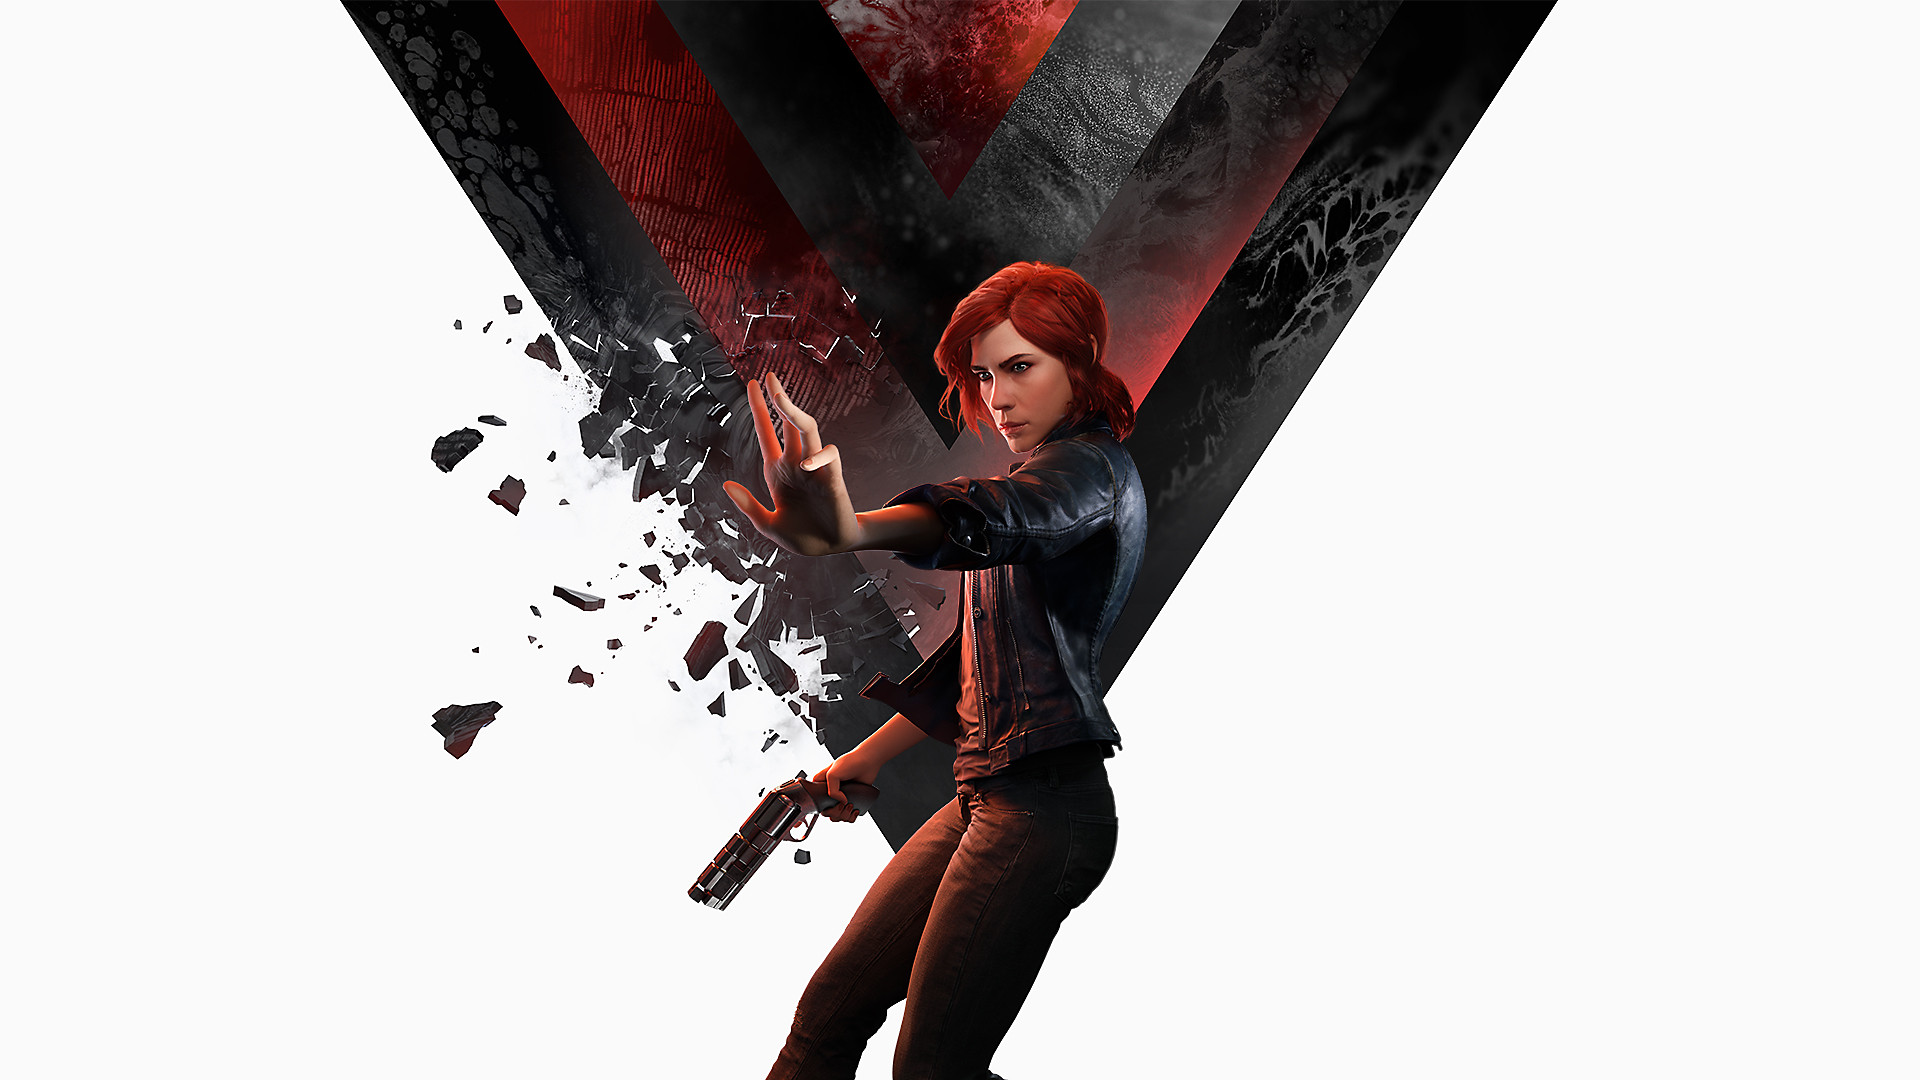 Control, Wolfenstein 2 et Tomb Raider rejoignent le Playstation Now en mars